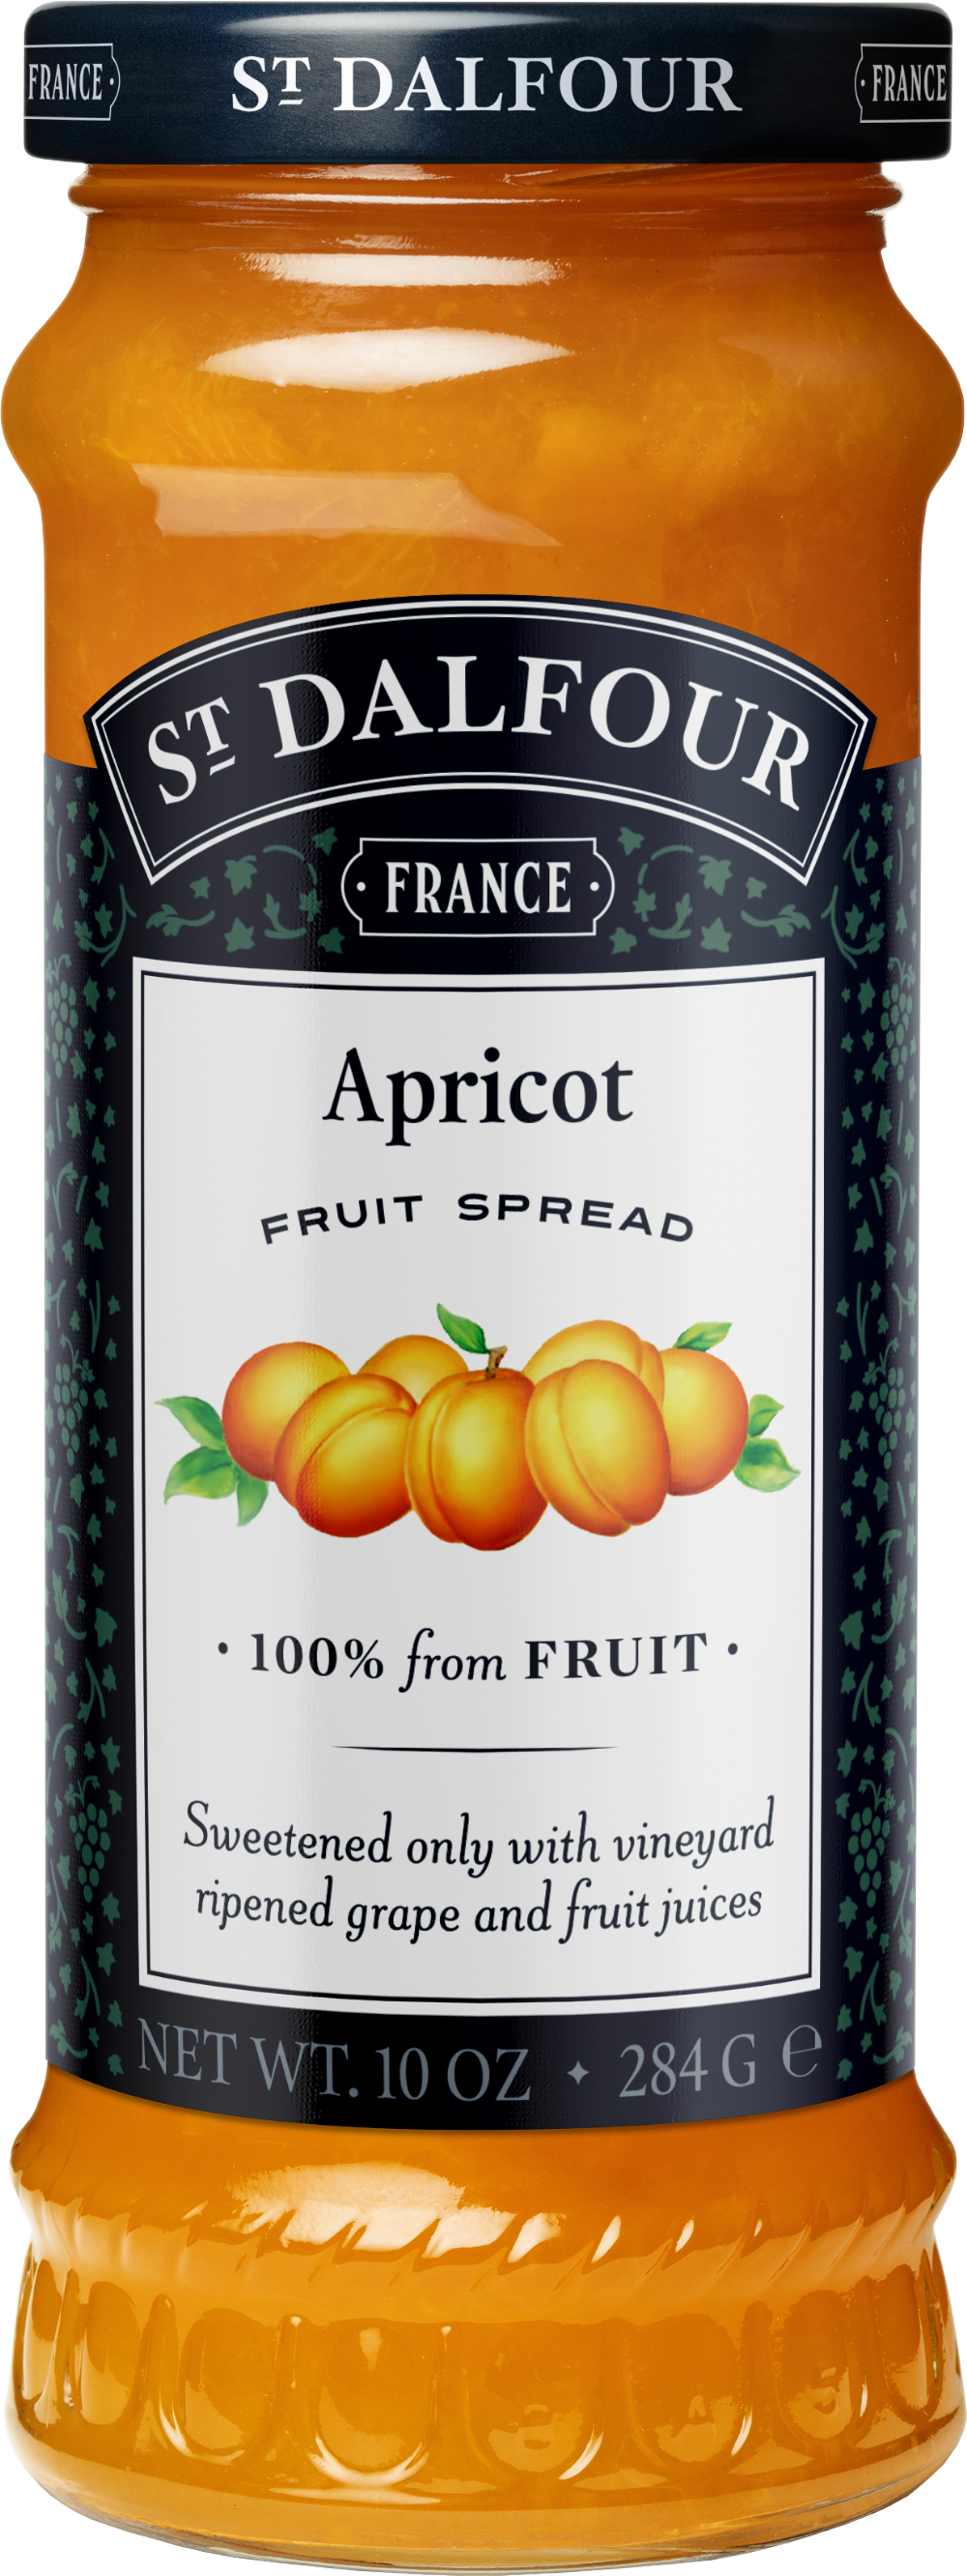 ST DALFOUR Apricot Fruit Spread 284g